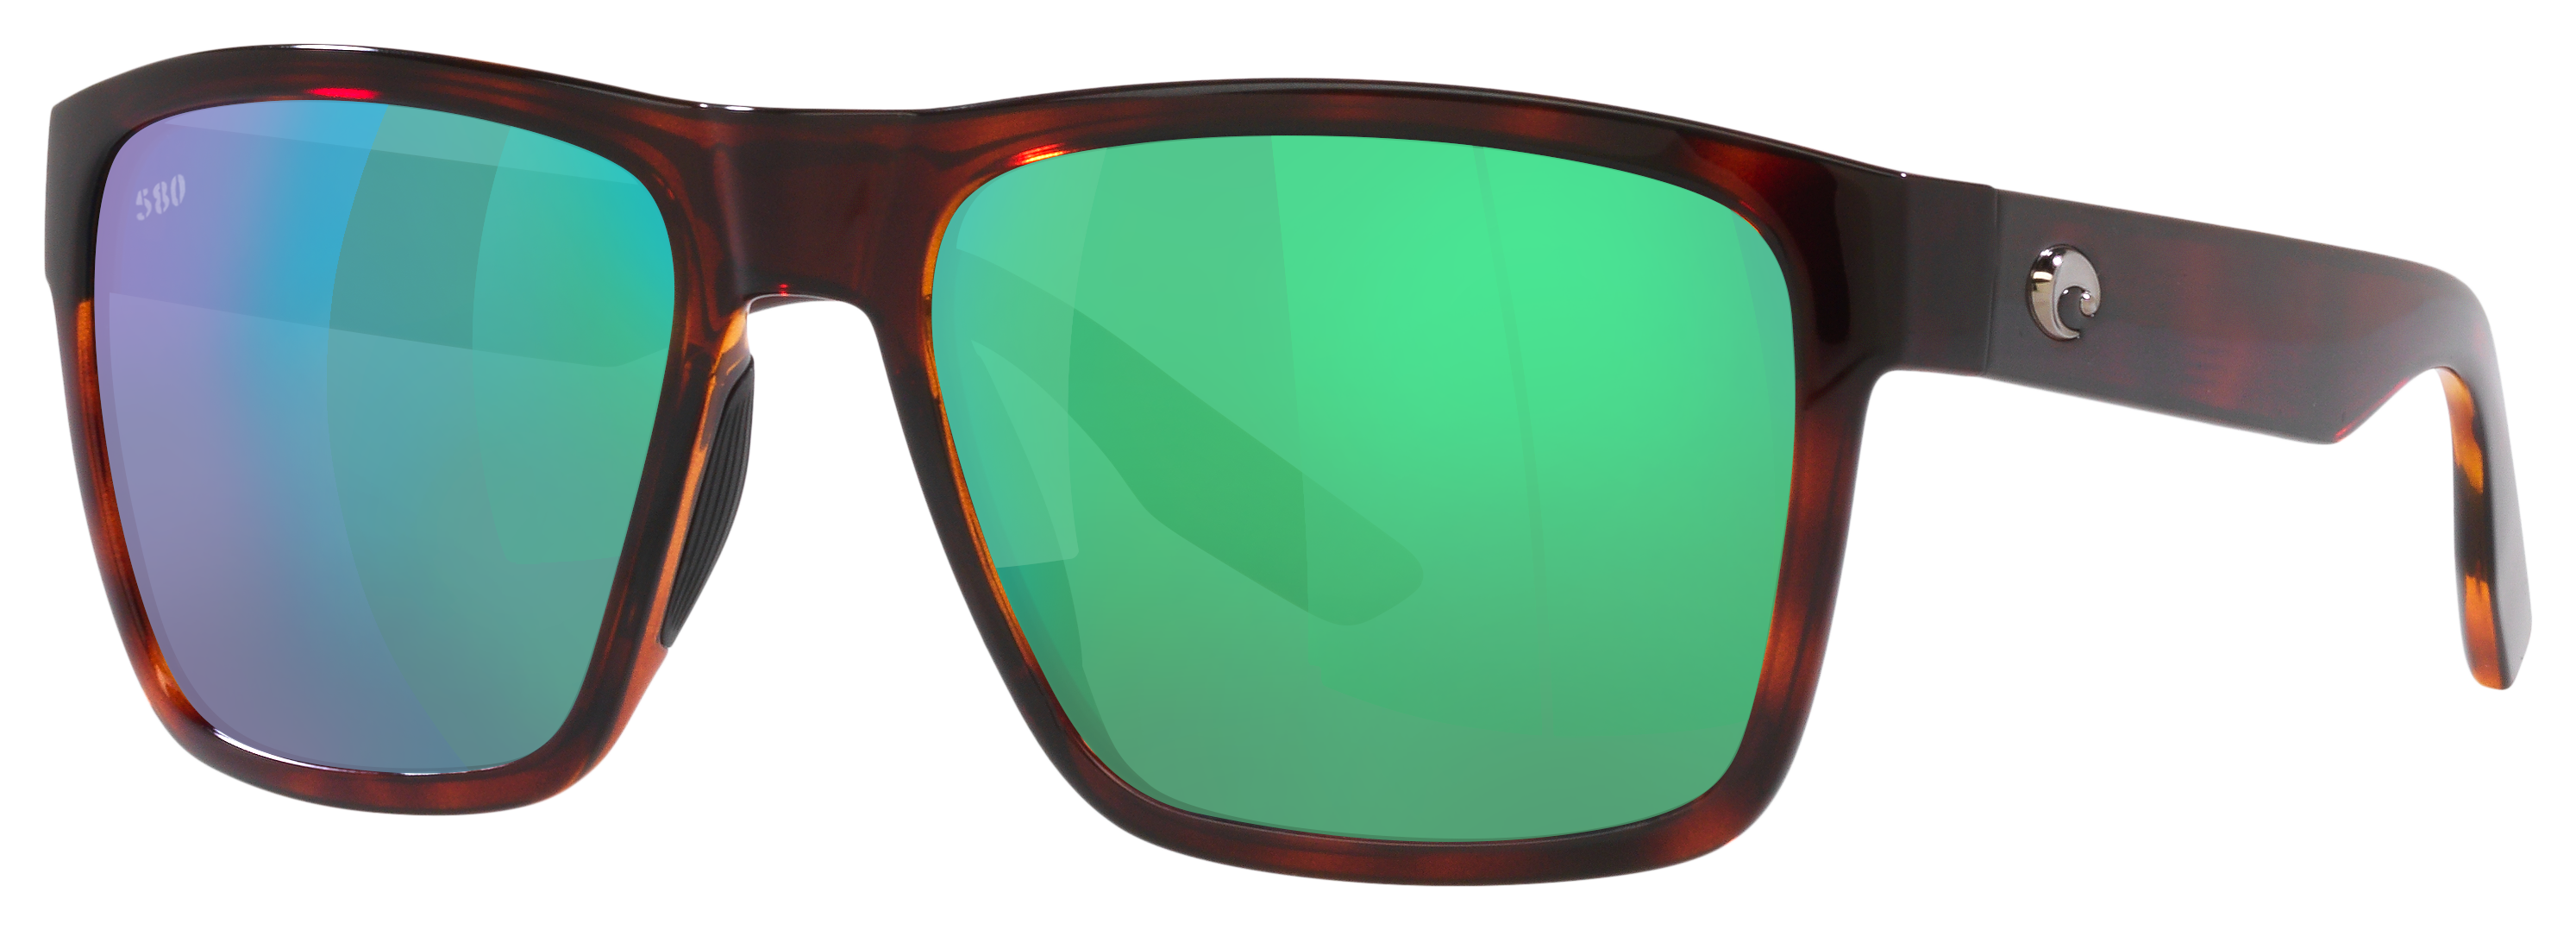 Costa Del Mar Paunch XL 580G Glass Polarized Sunglasses - Tortoise/Green Mirror - Medium